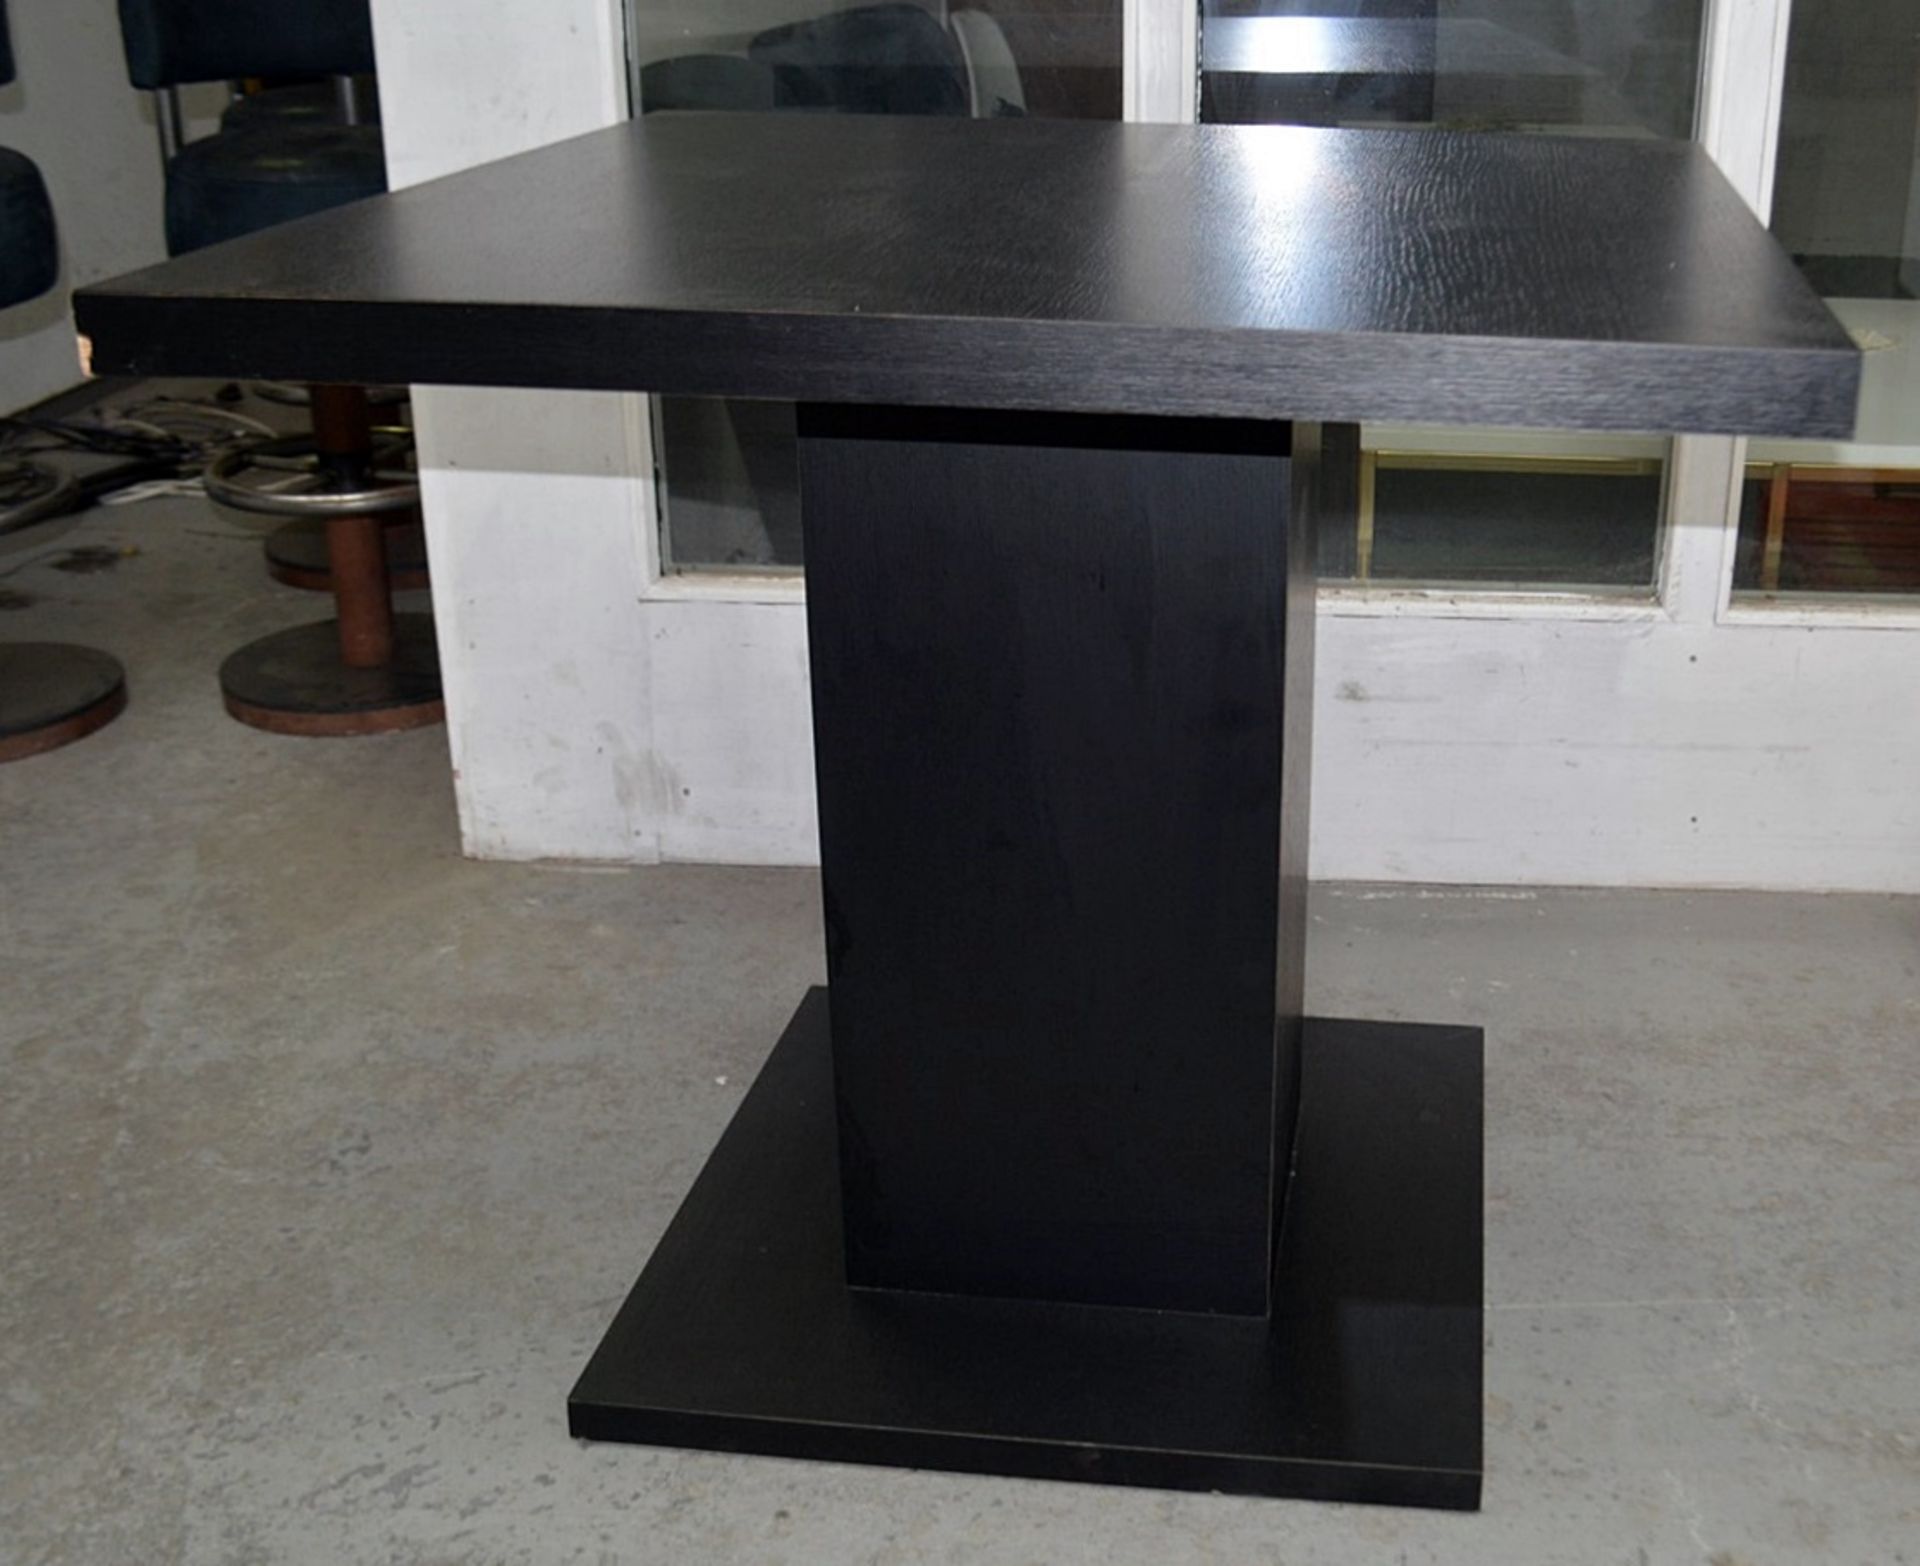 1 x Large Square Dining / Meeting Table In A Dark Wood Veneer - Ex-Showroom Piece - Ref: HAR122 - Image 4 of 4